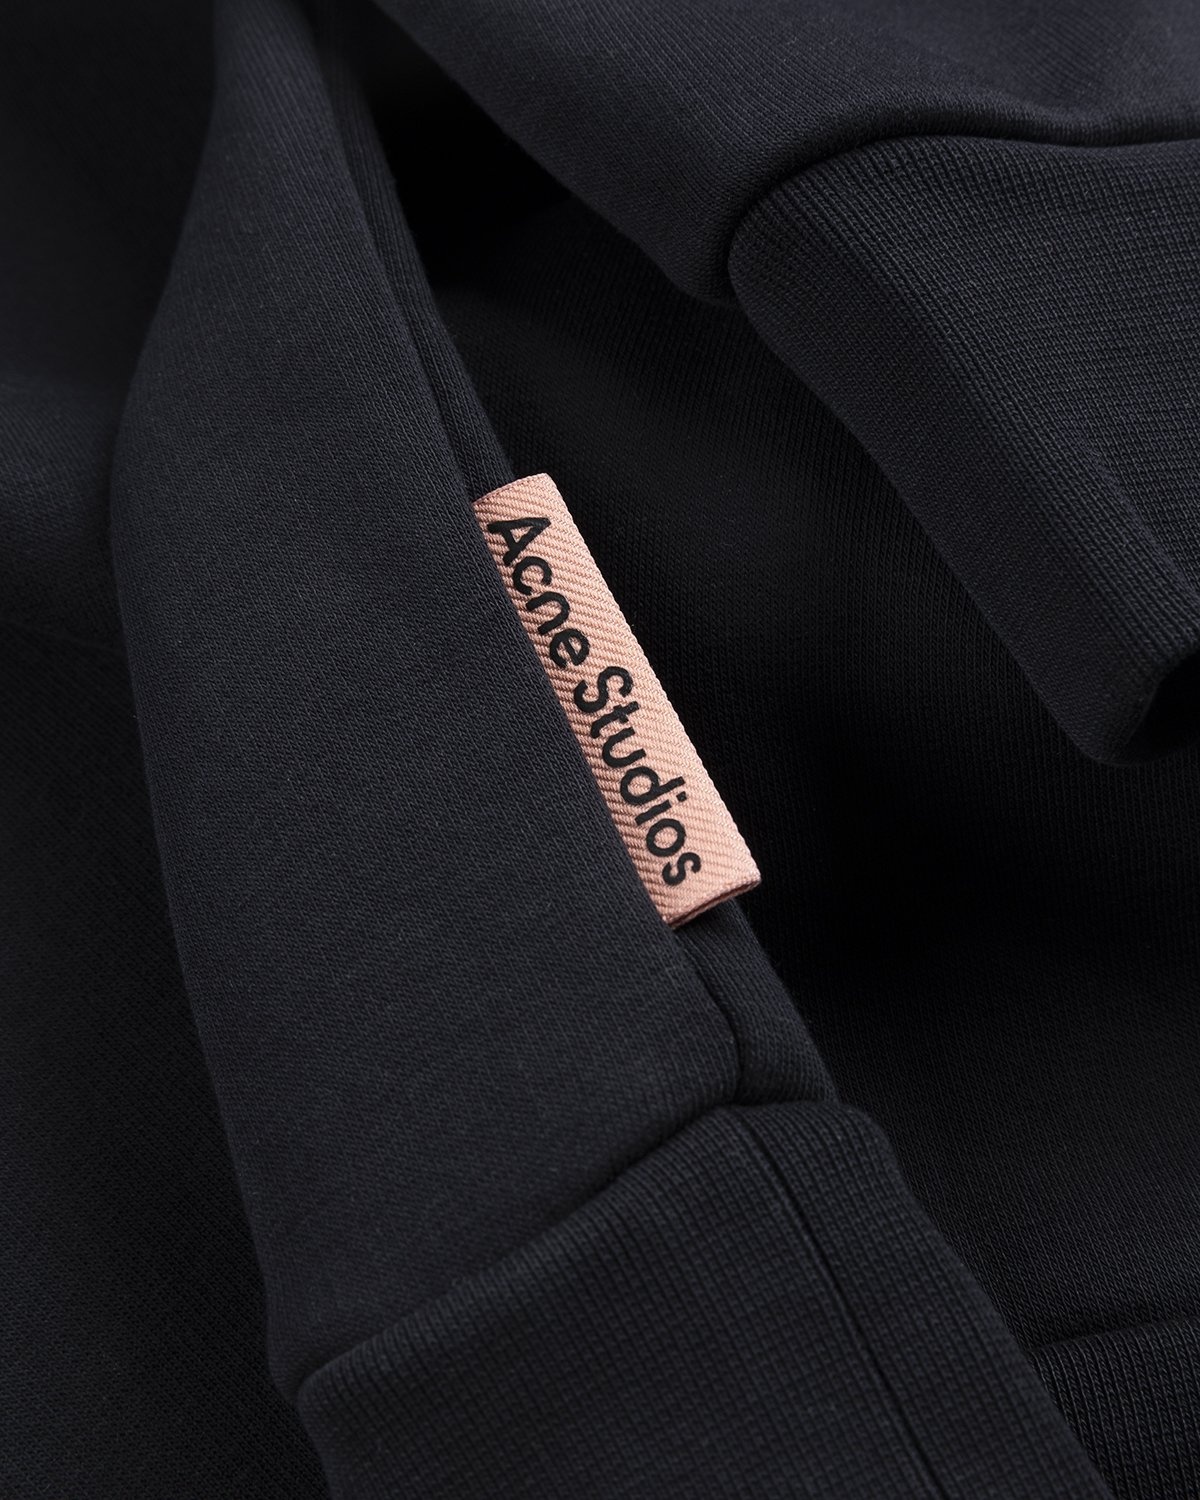 Acne Studios – Brushed Sweatshirt Black - Sweatshirts - Black - Image 4